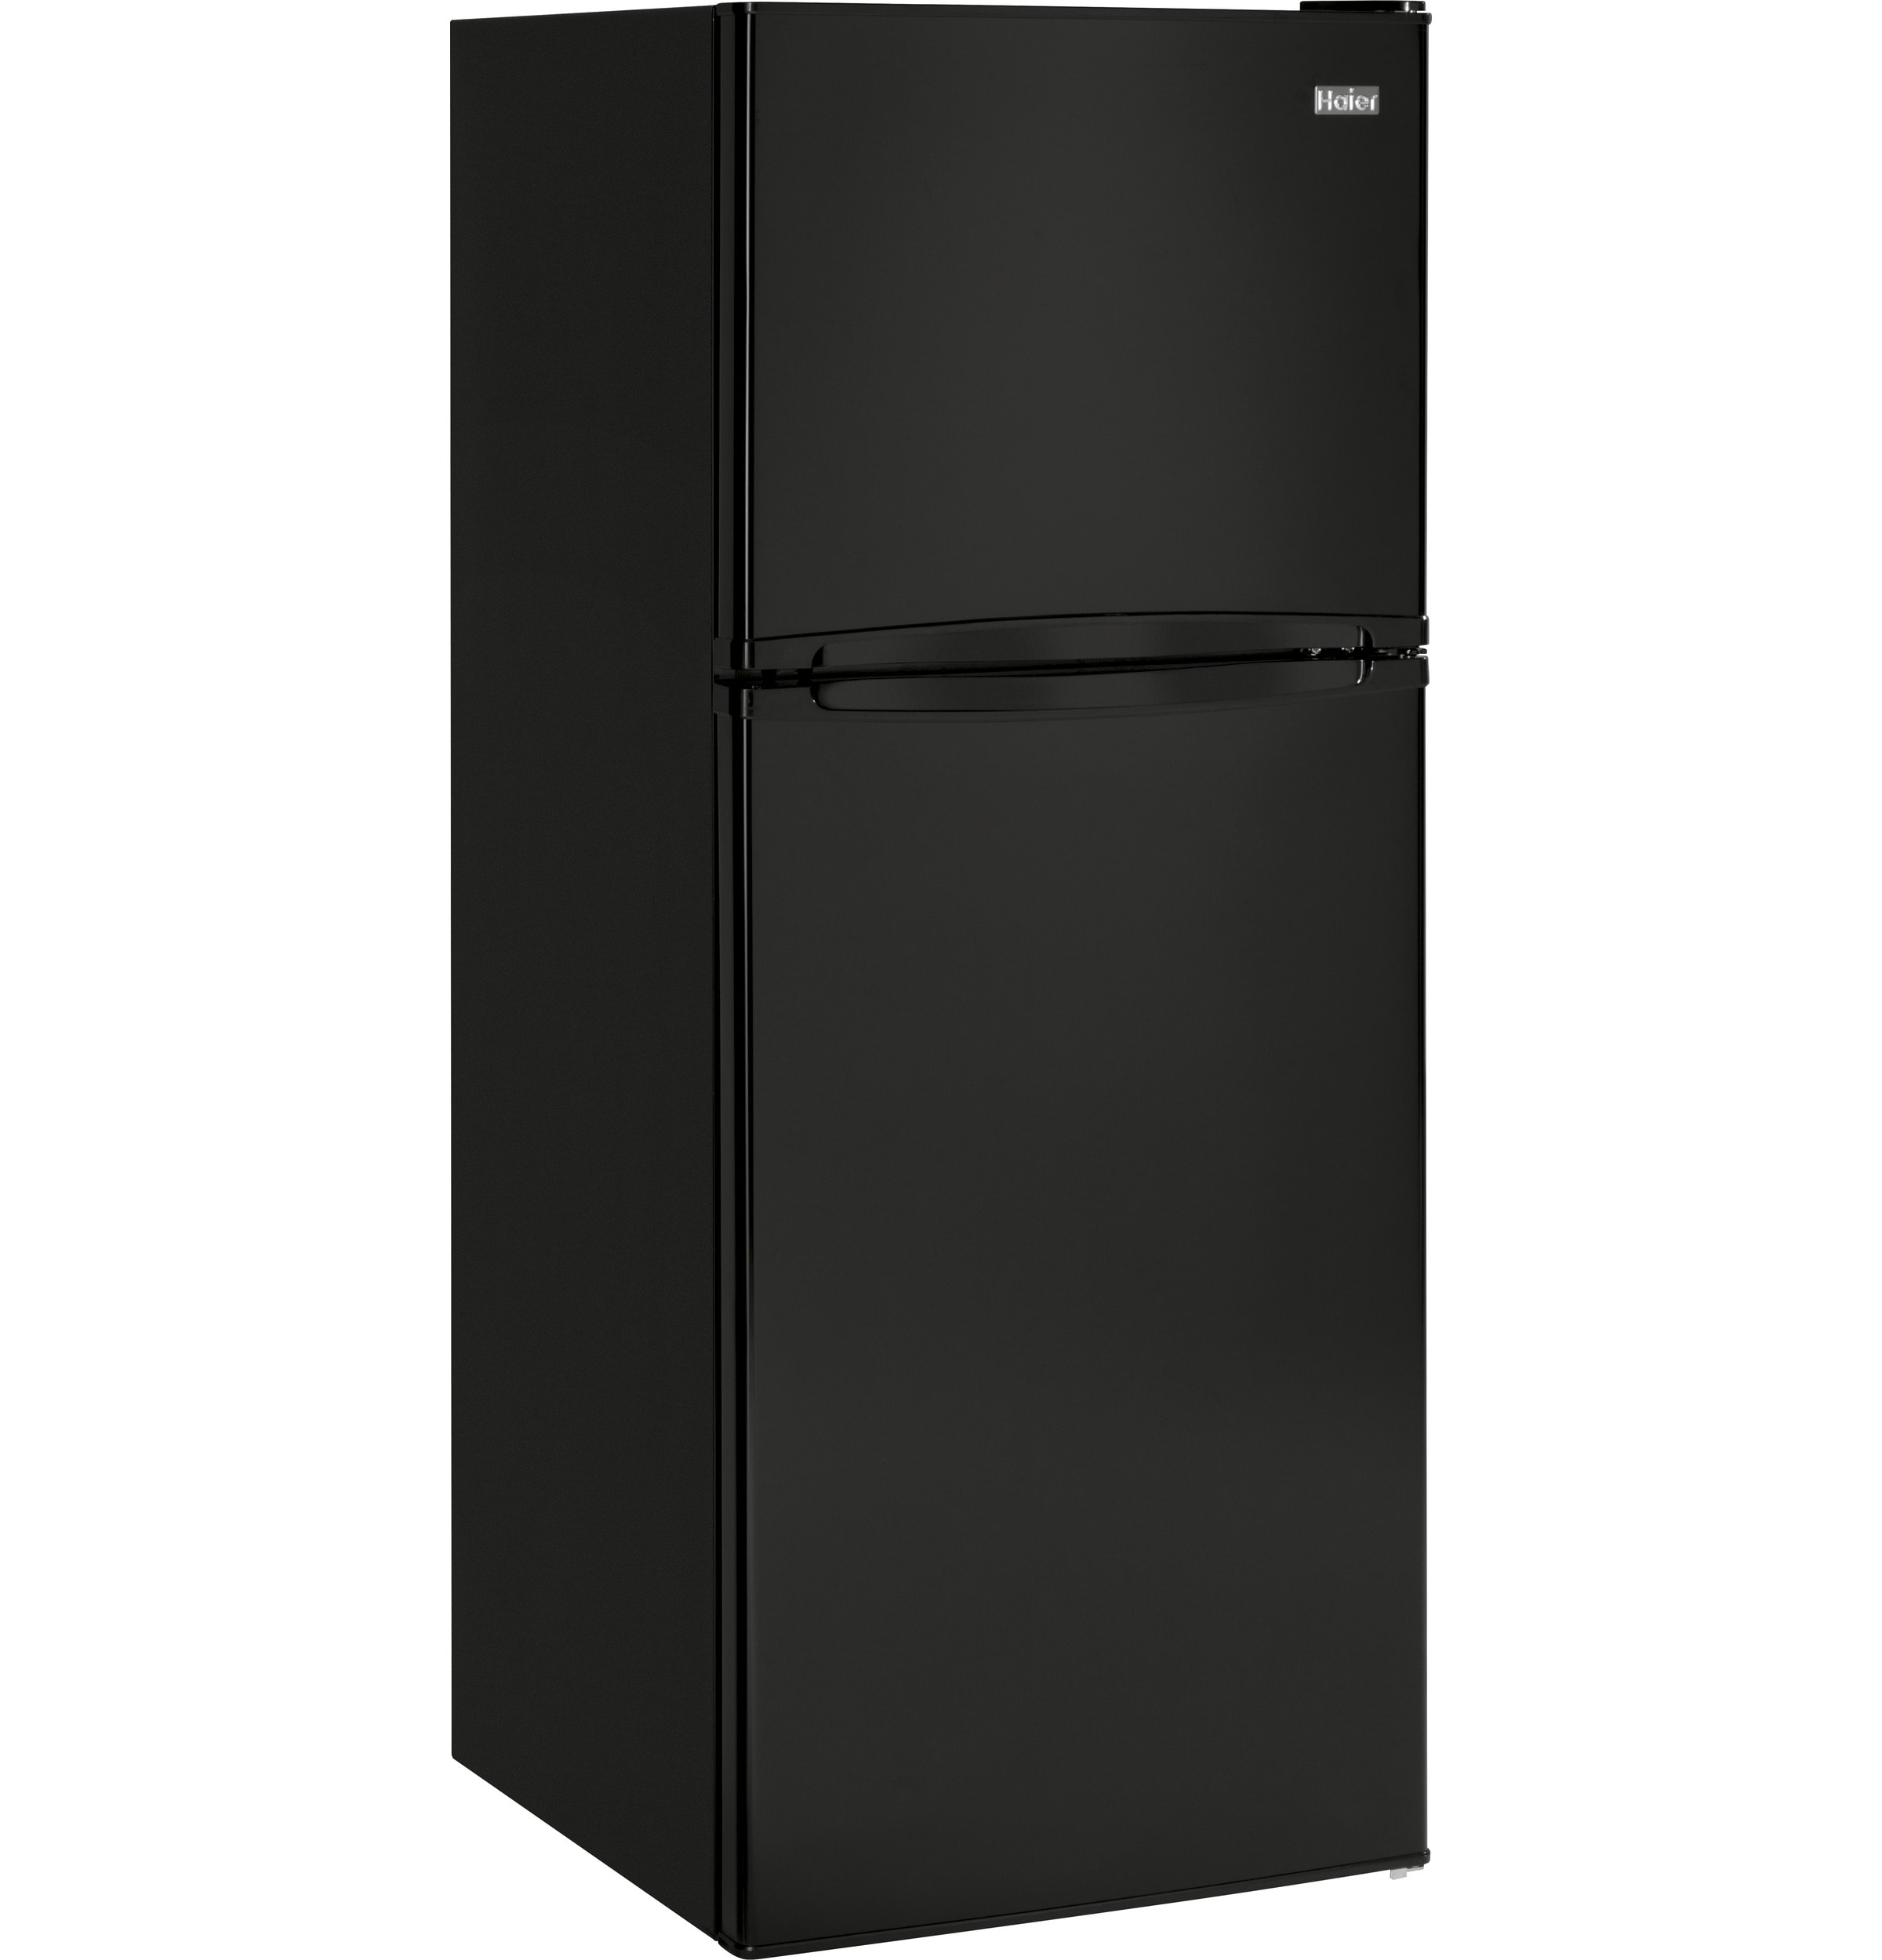 Haier 9.8-cu ft Counter-depth Top-Freezer Refrigerator (Black) in 